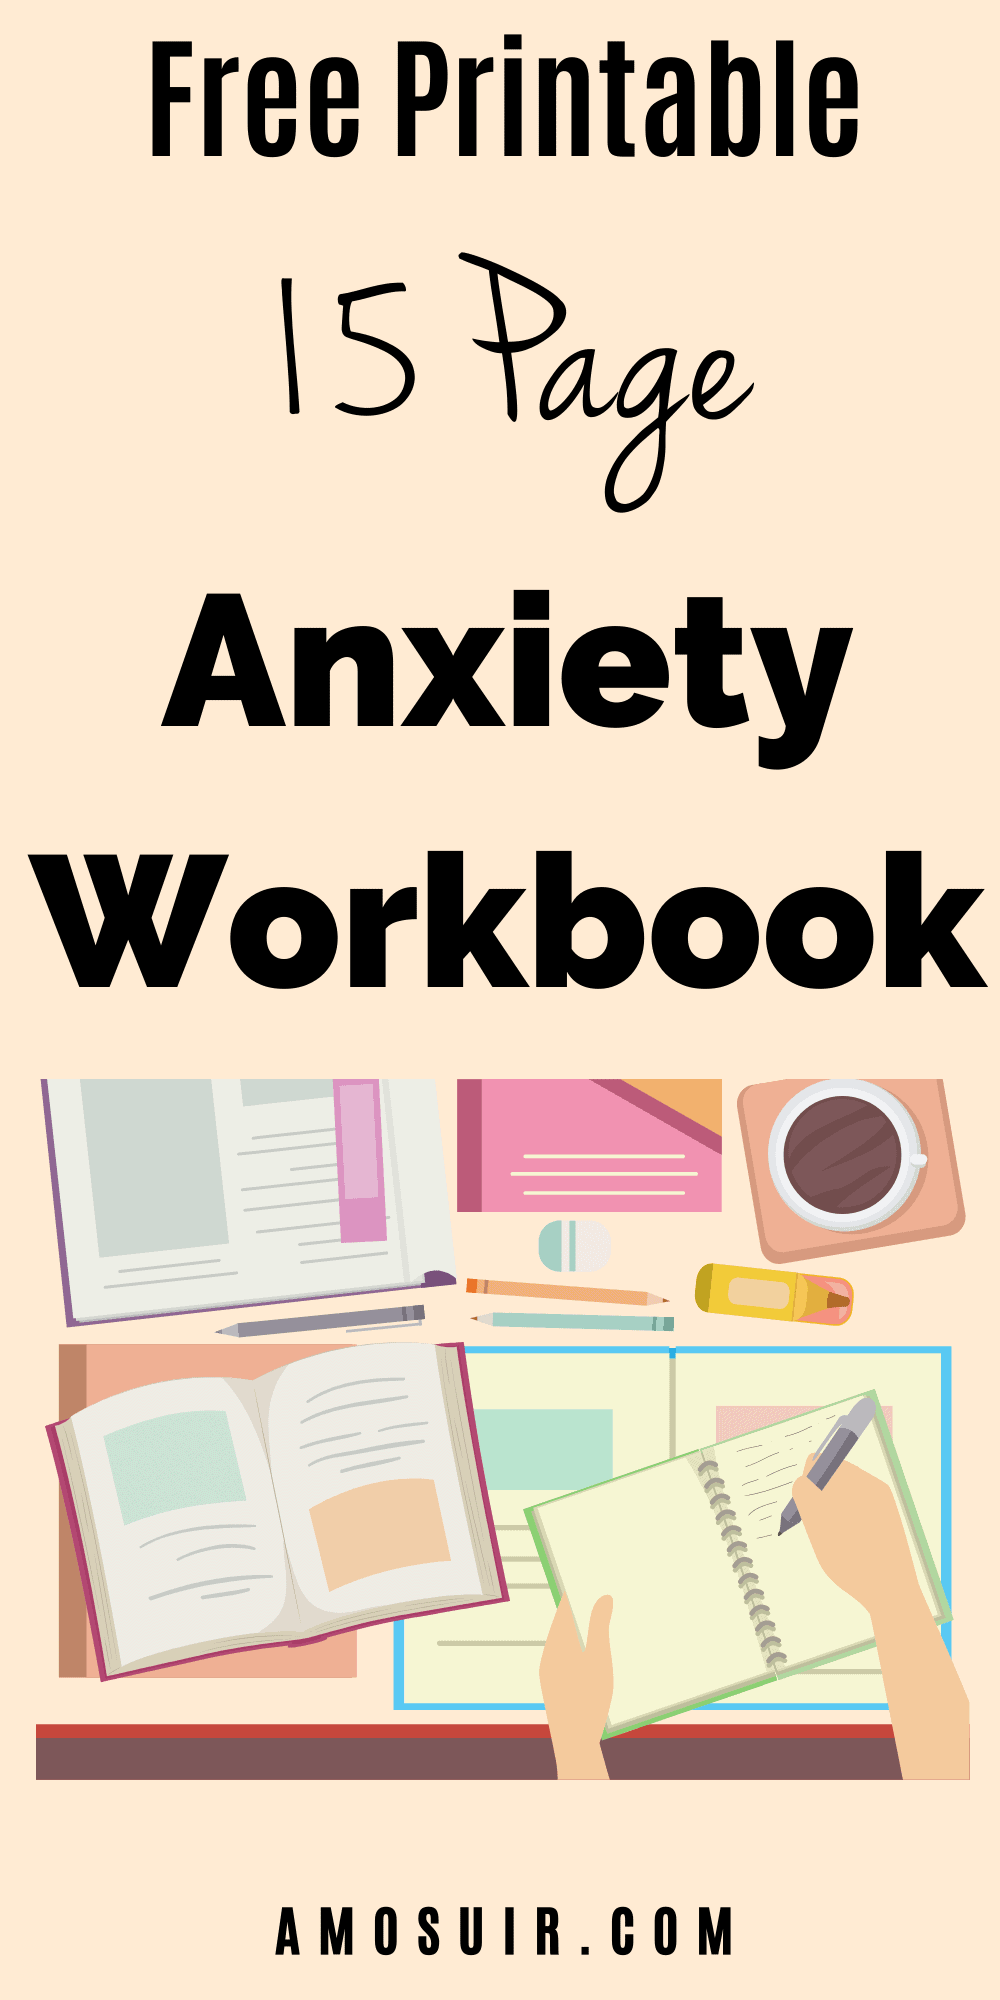 download-your-free-printable-anxiety-workbook-pdf-amosuir